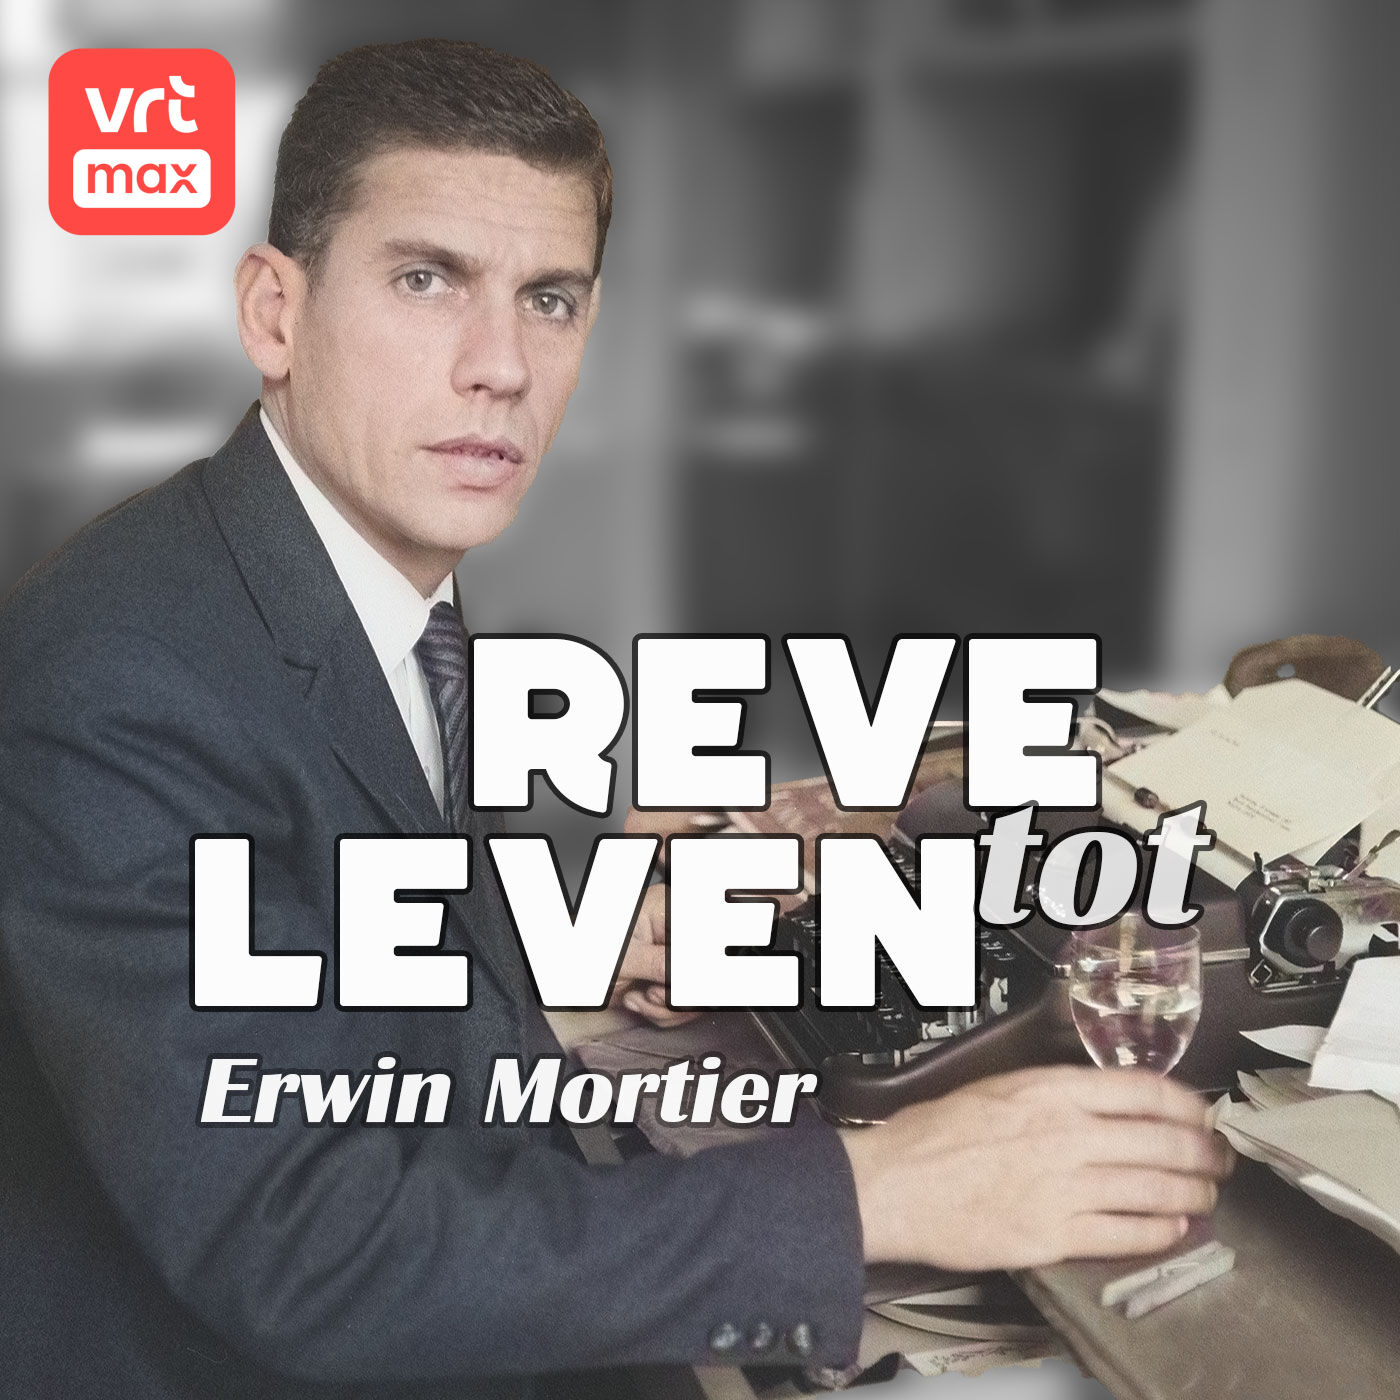 Erwin Mortier